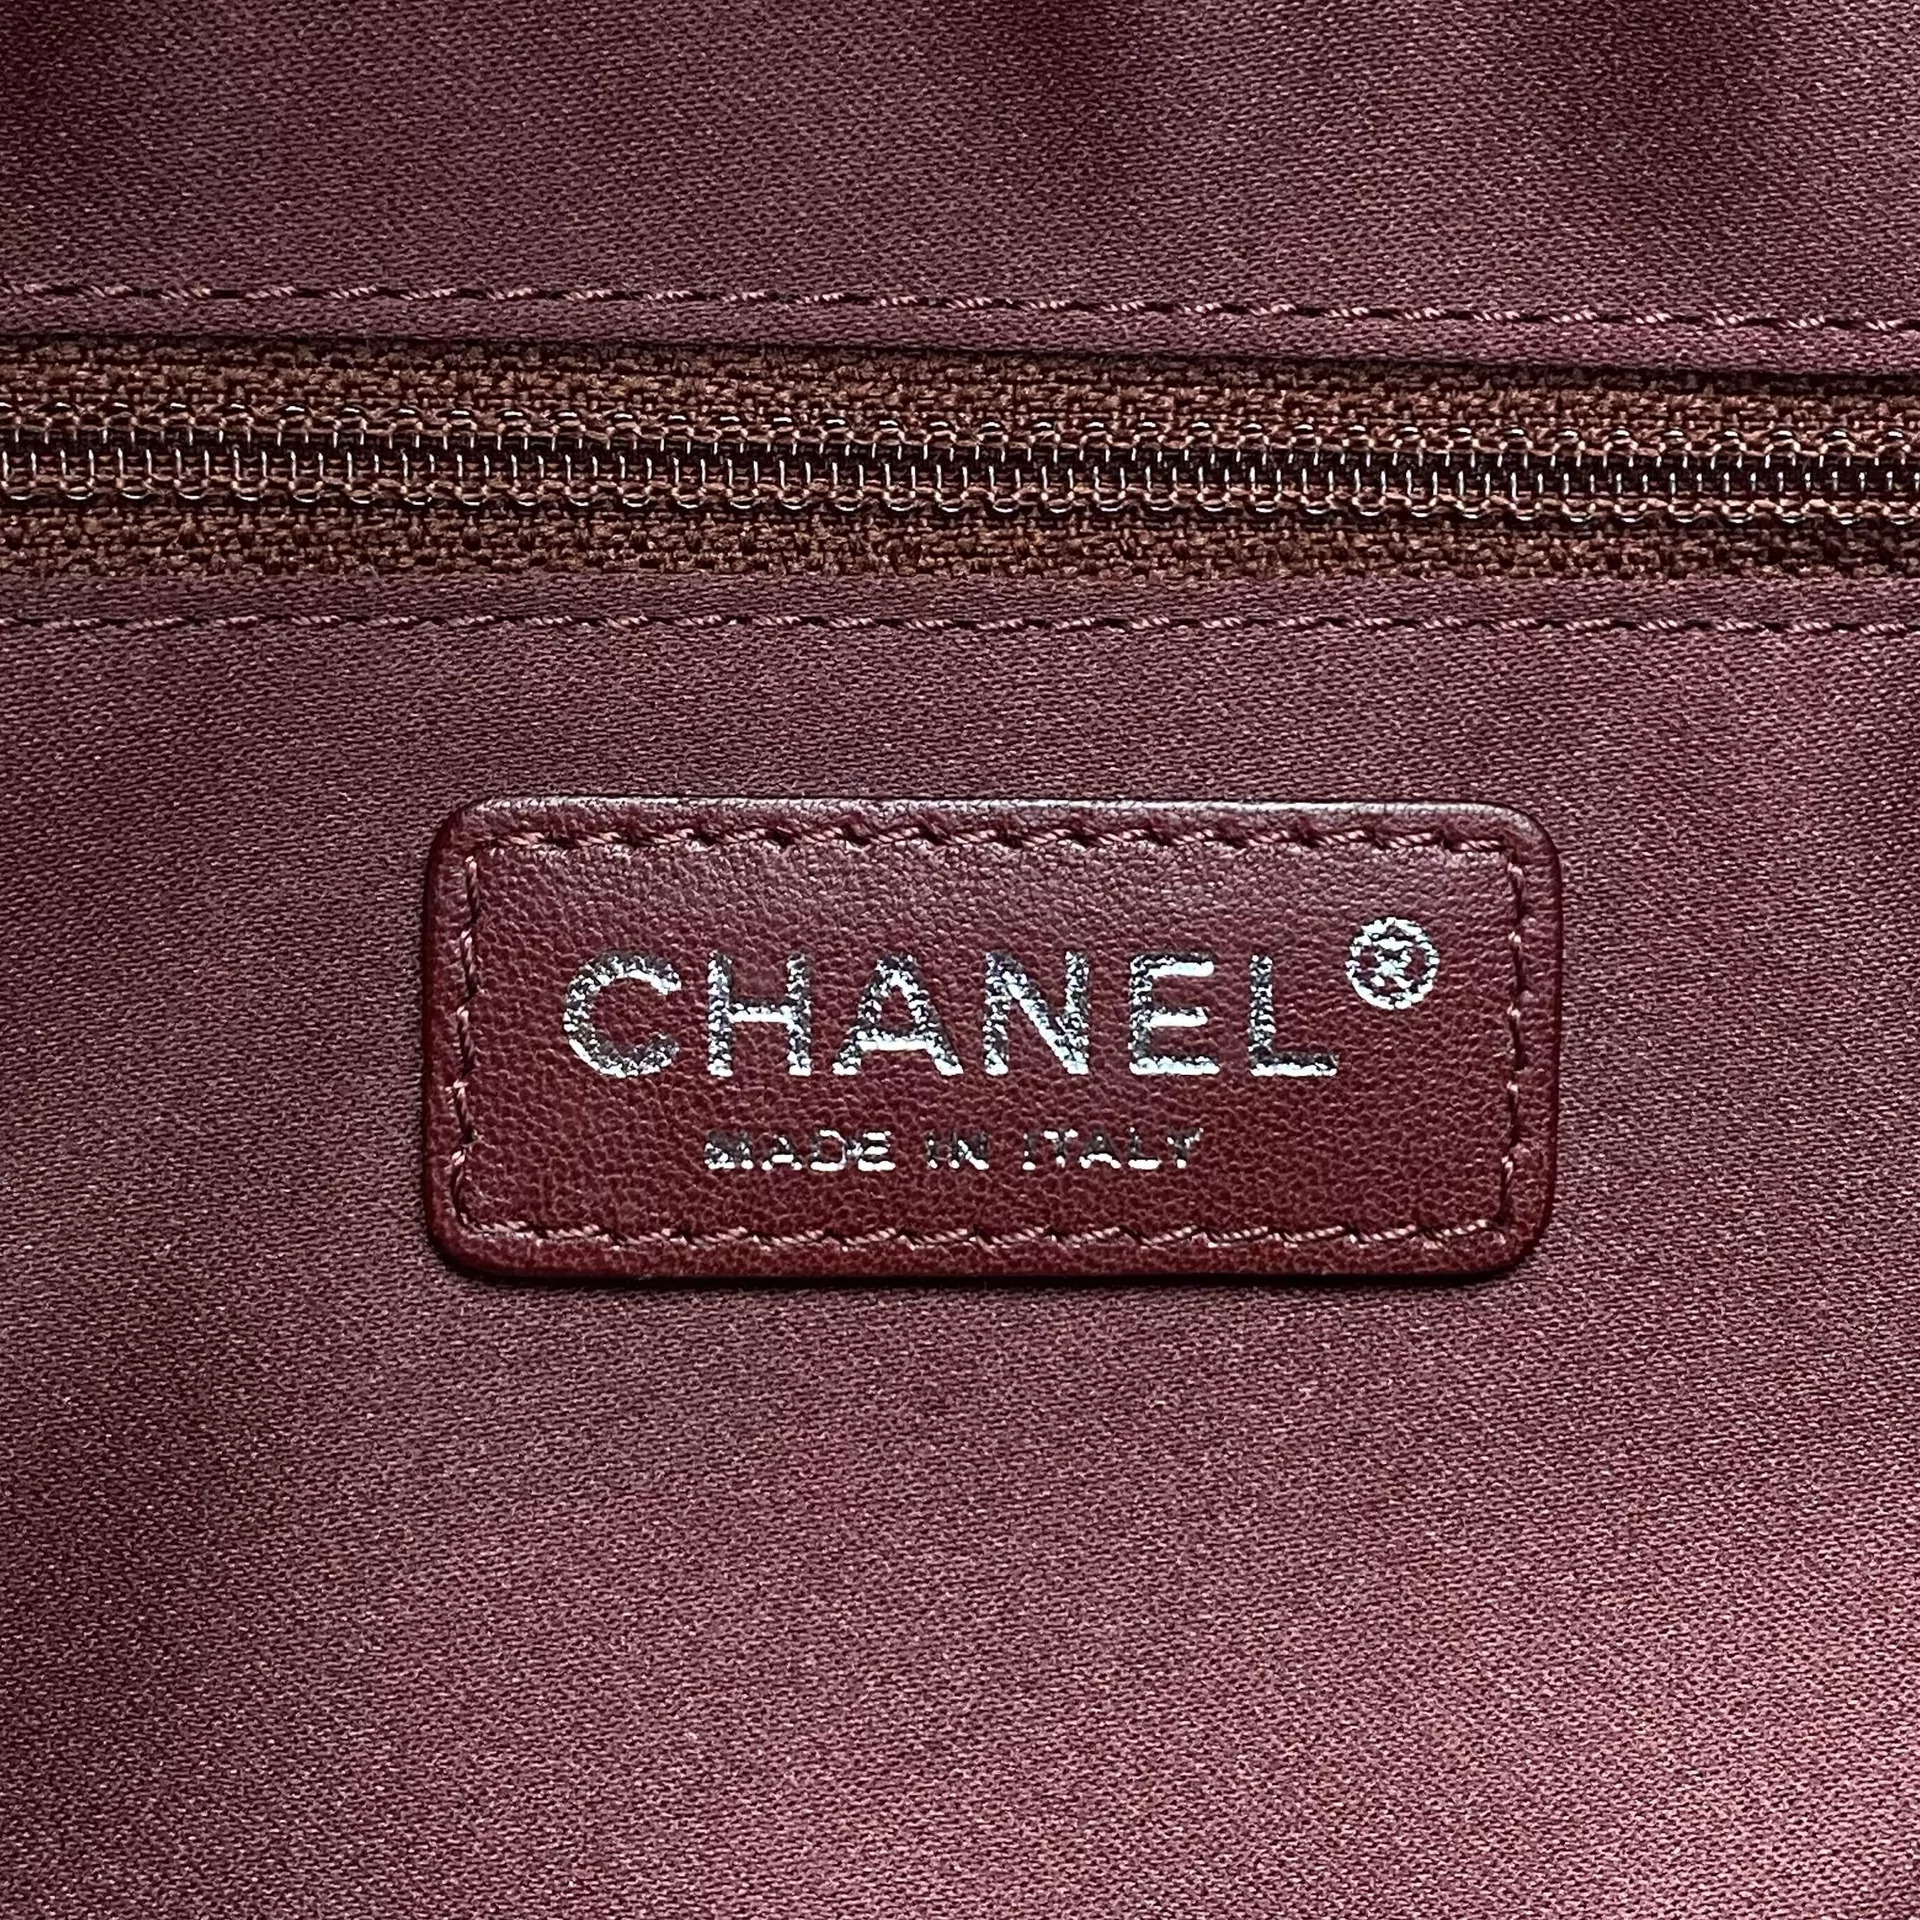 Bolsa Chanel Couro Lambskin Vermelha